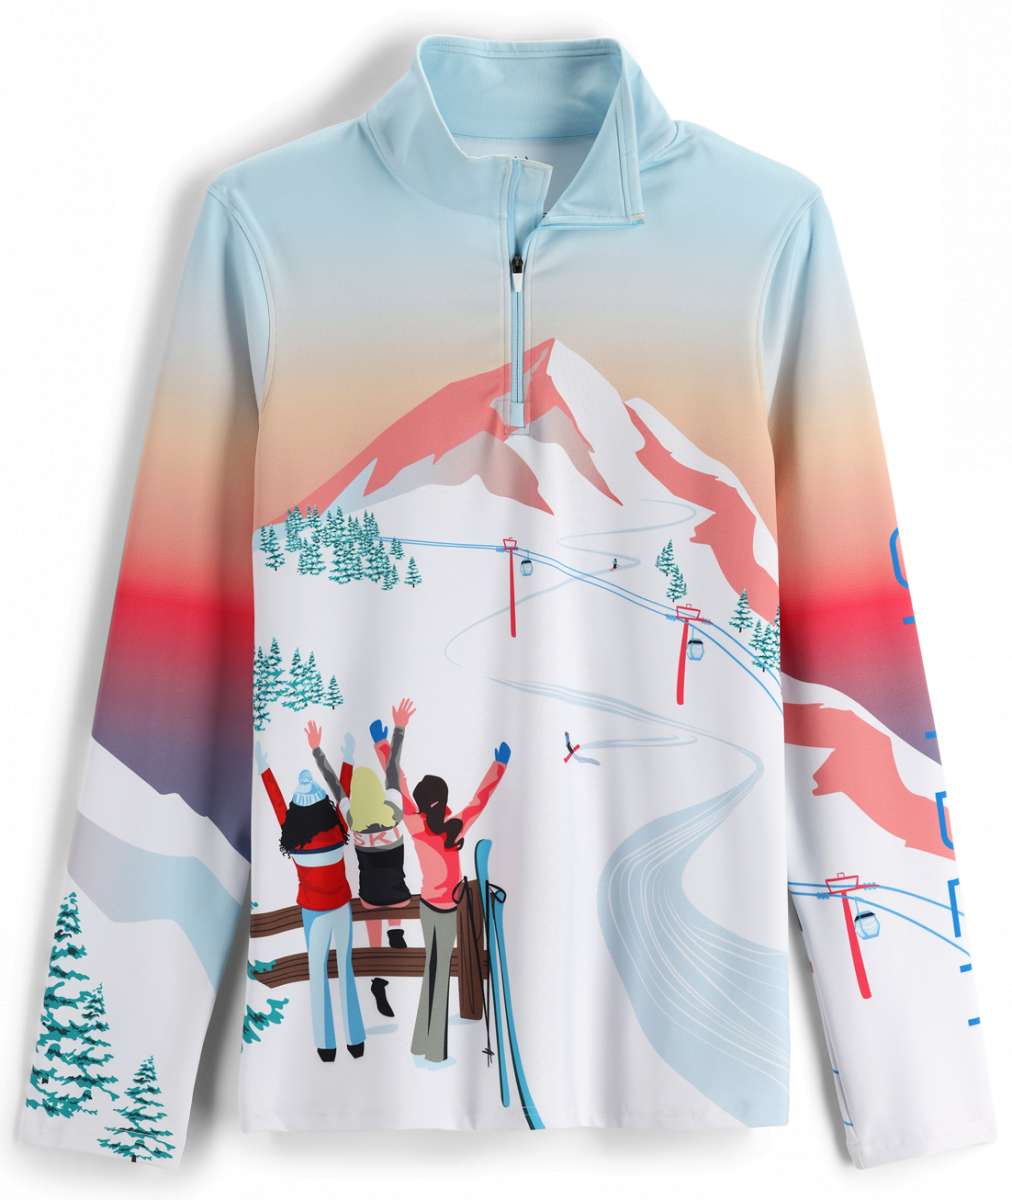 Buy Spyder Ski Clothing online - Snowleader